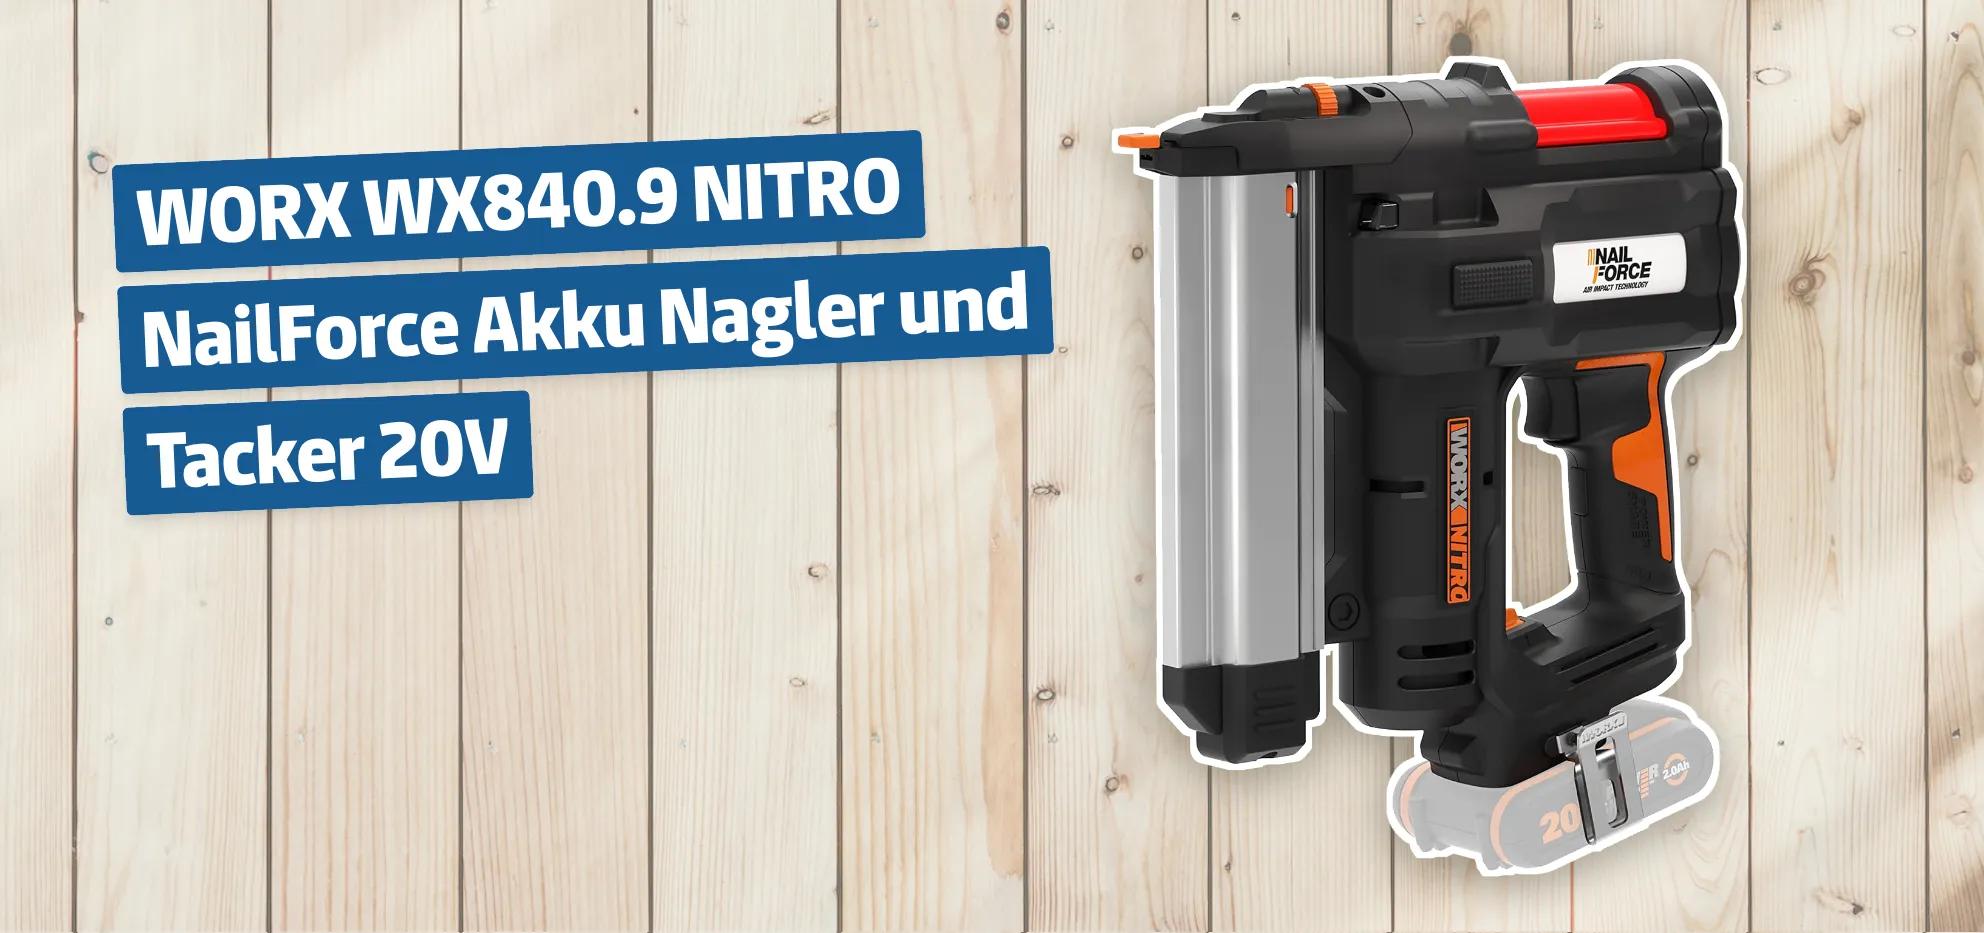 WORX WX840.9 NITRO NailForce Akku Nagler und Tacker 20V